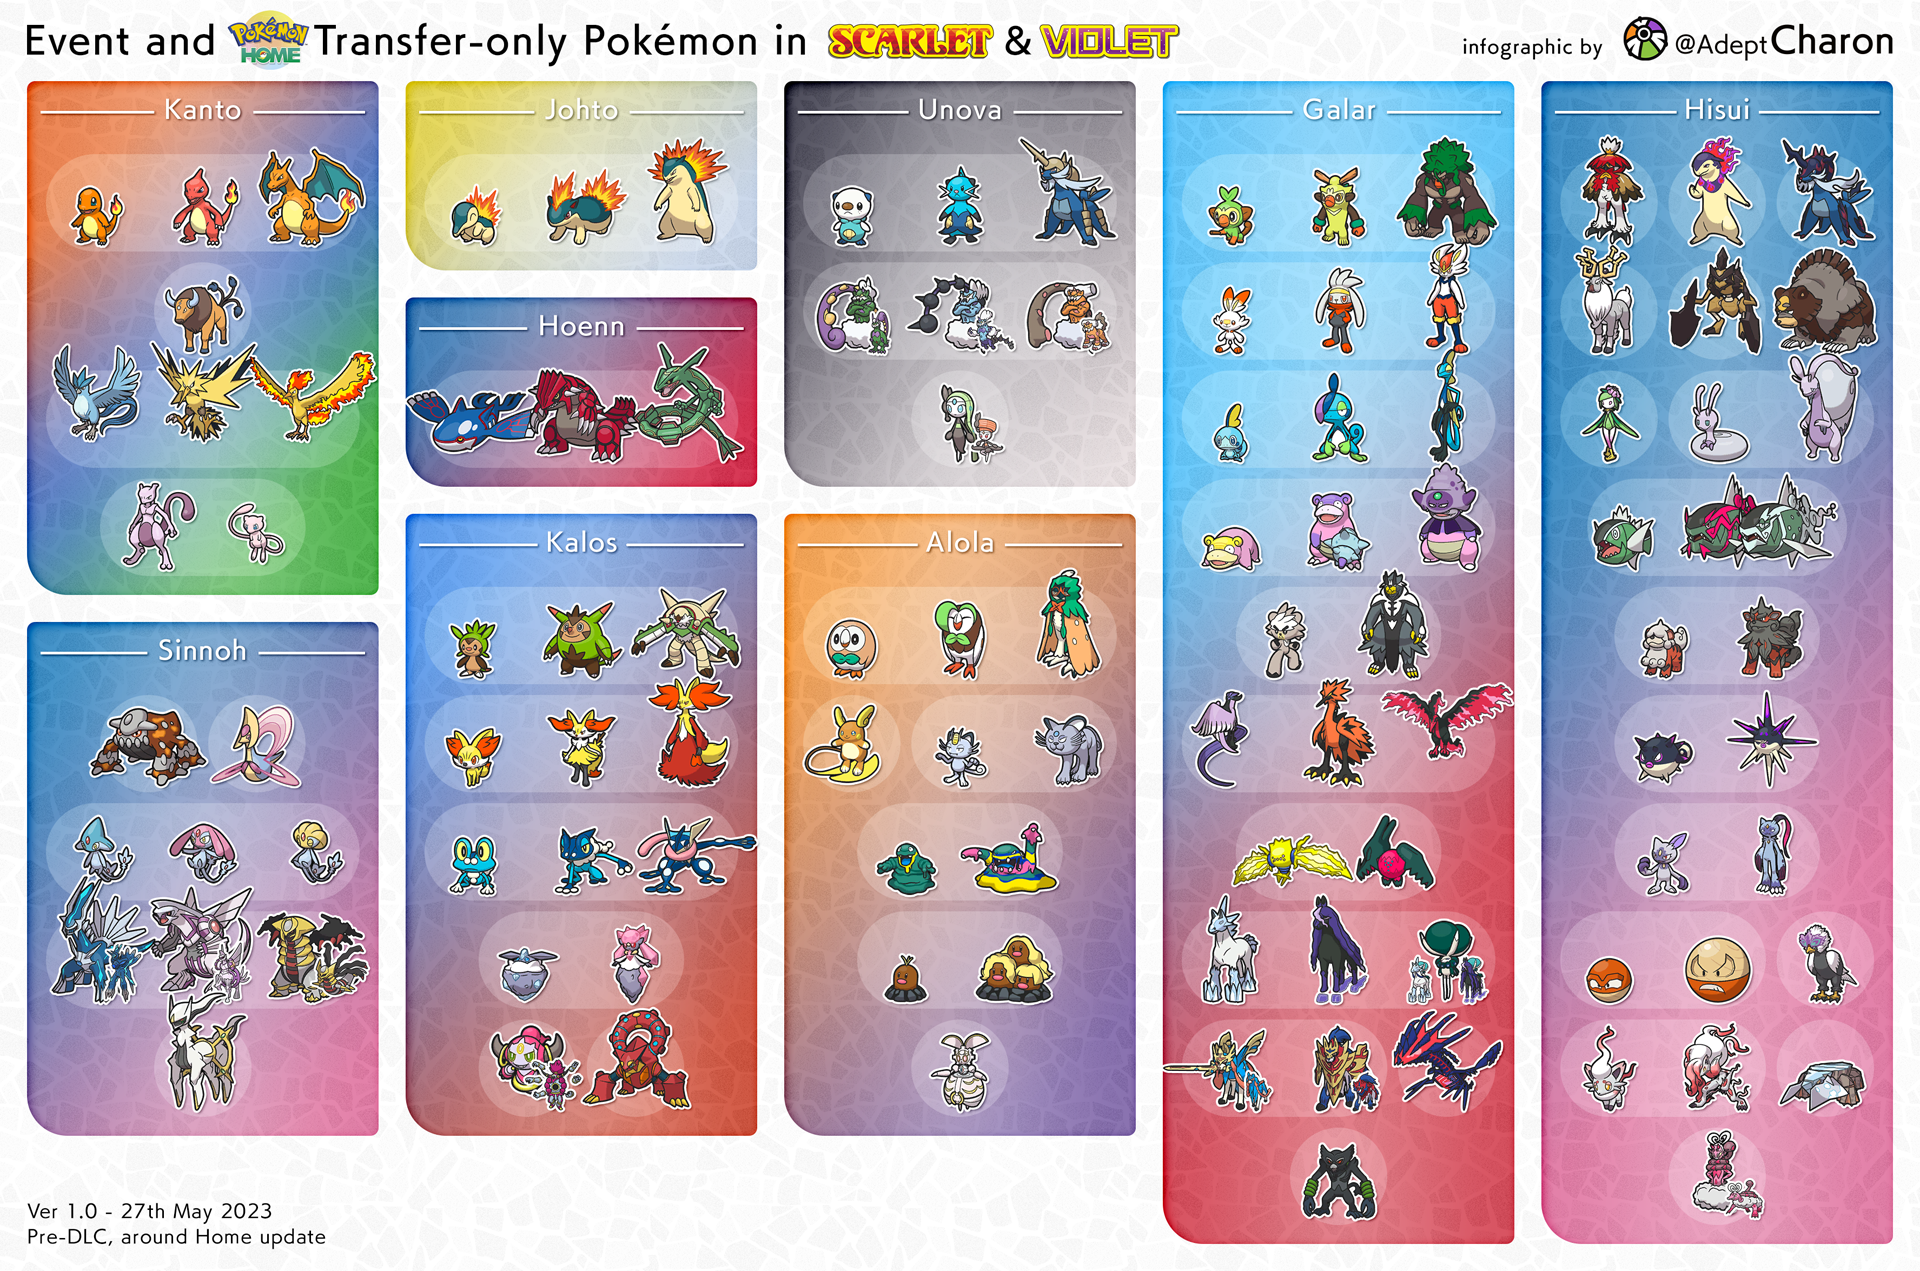 Pokémon Violet and Scarlet exclusives list - Polygon